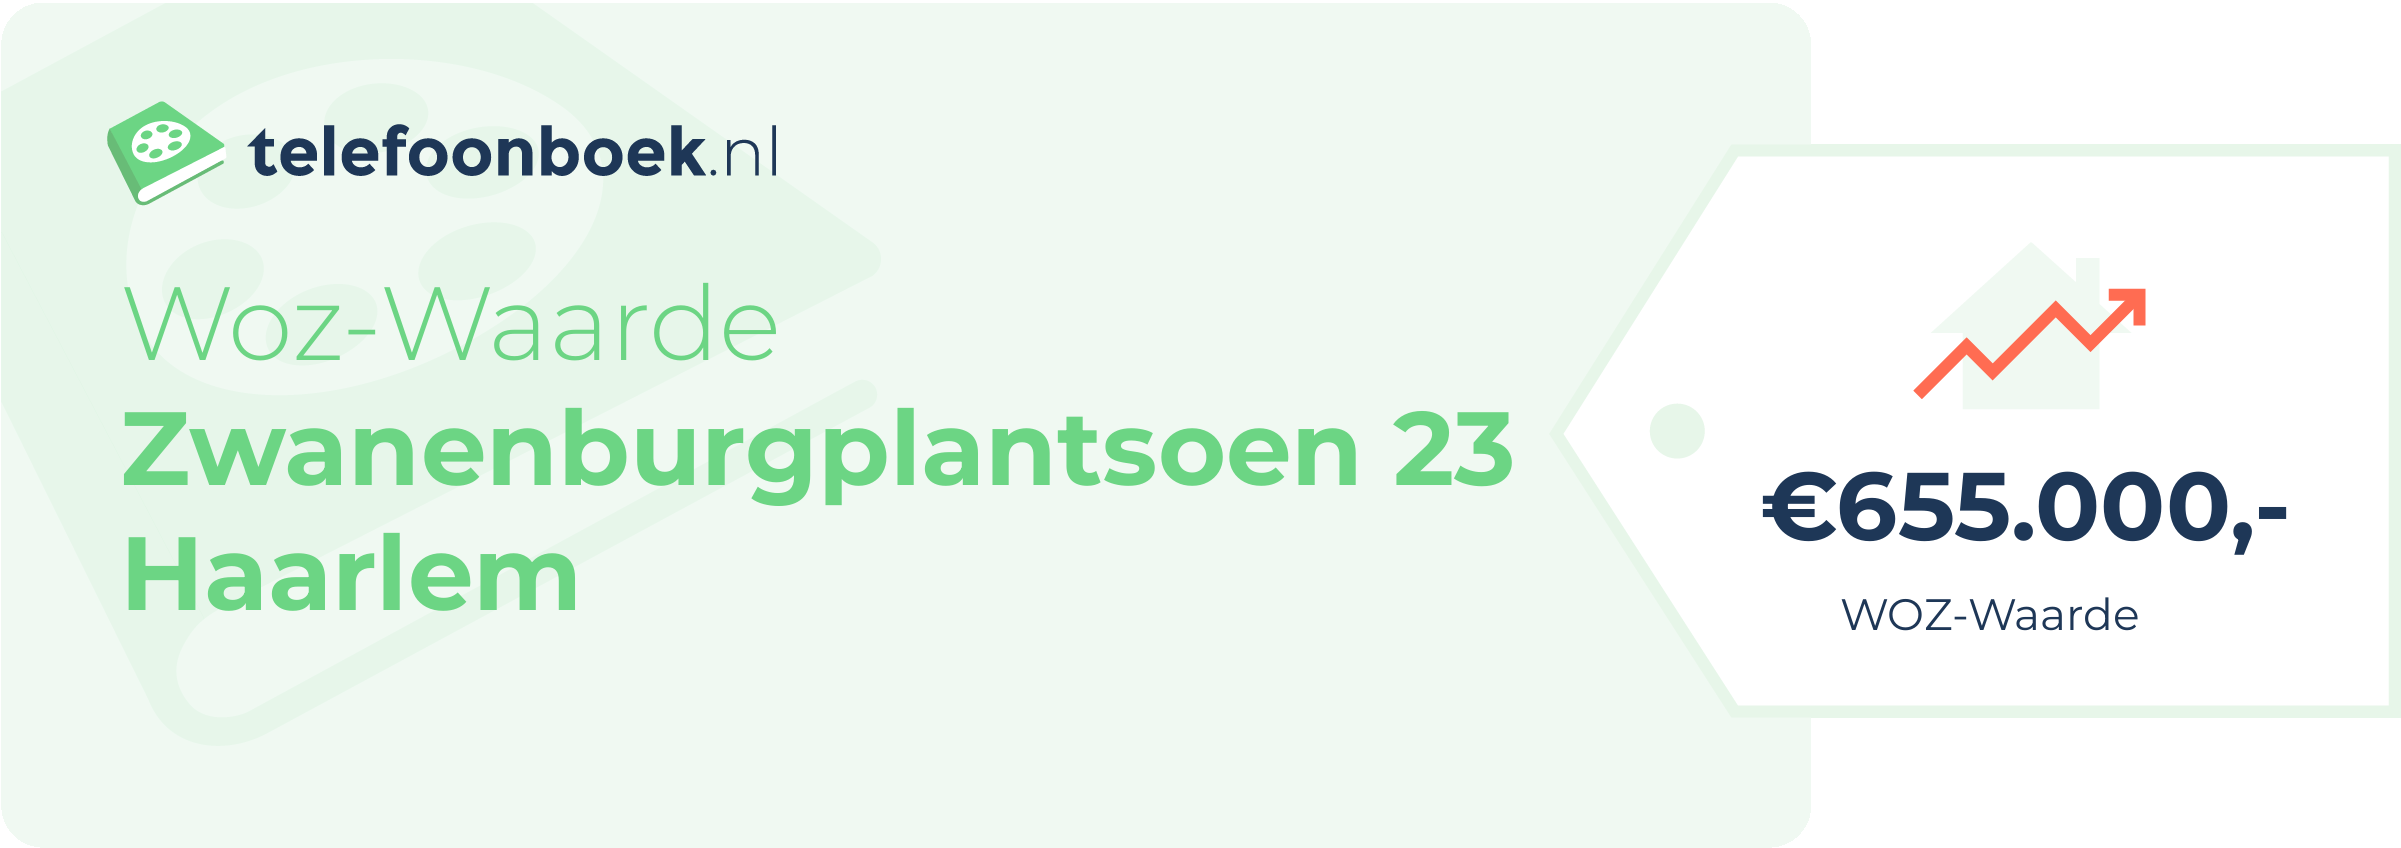 WOZ-waarde Zwanenburgplantsoen 23 Haarlem